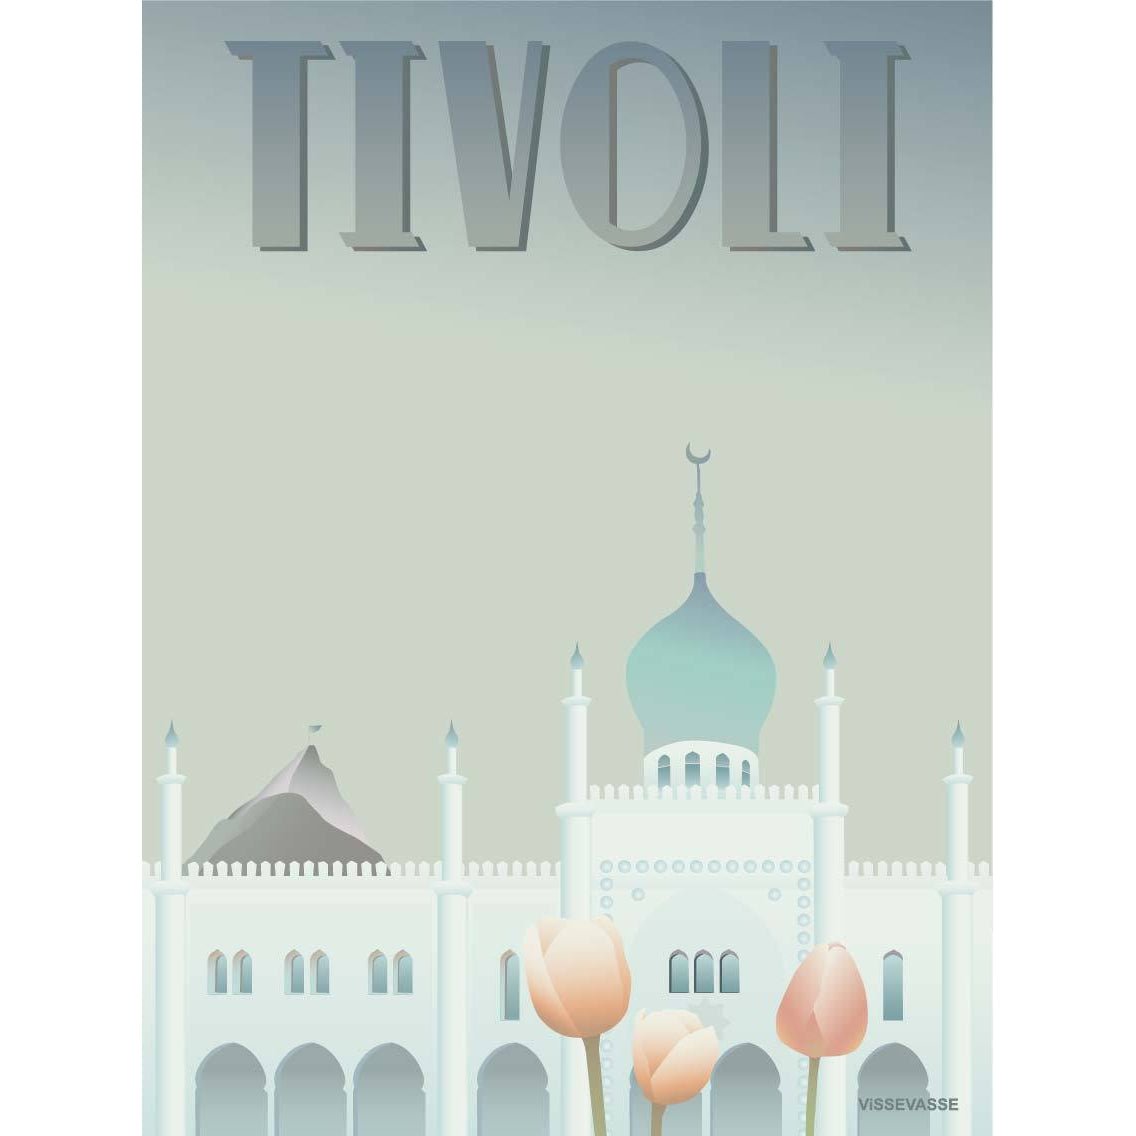 Vissevasse Tivoli nimb affisch, 15x21 cm